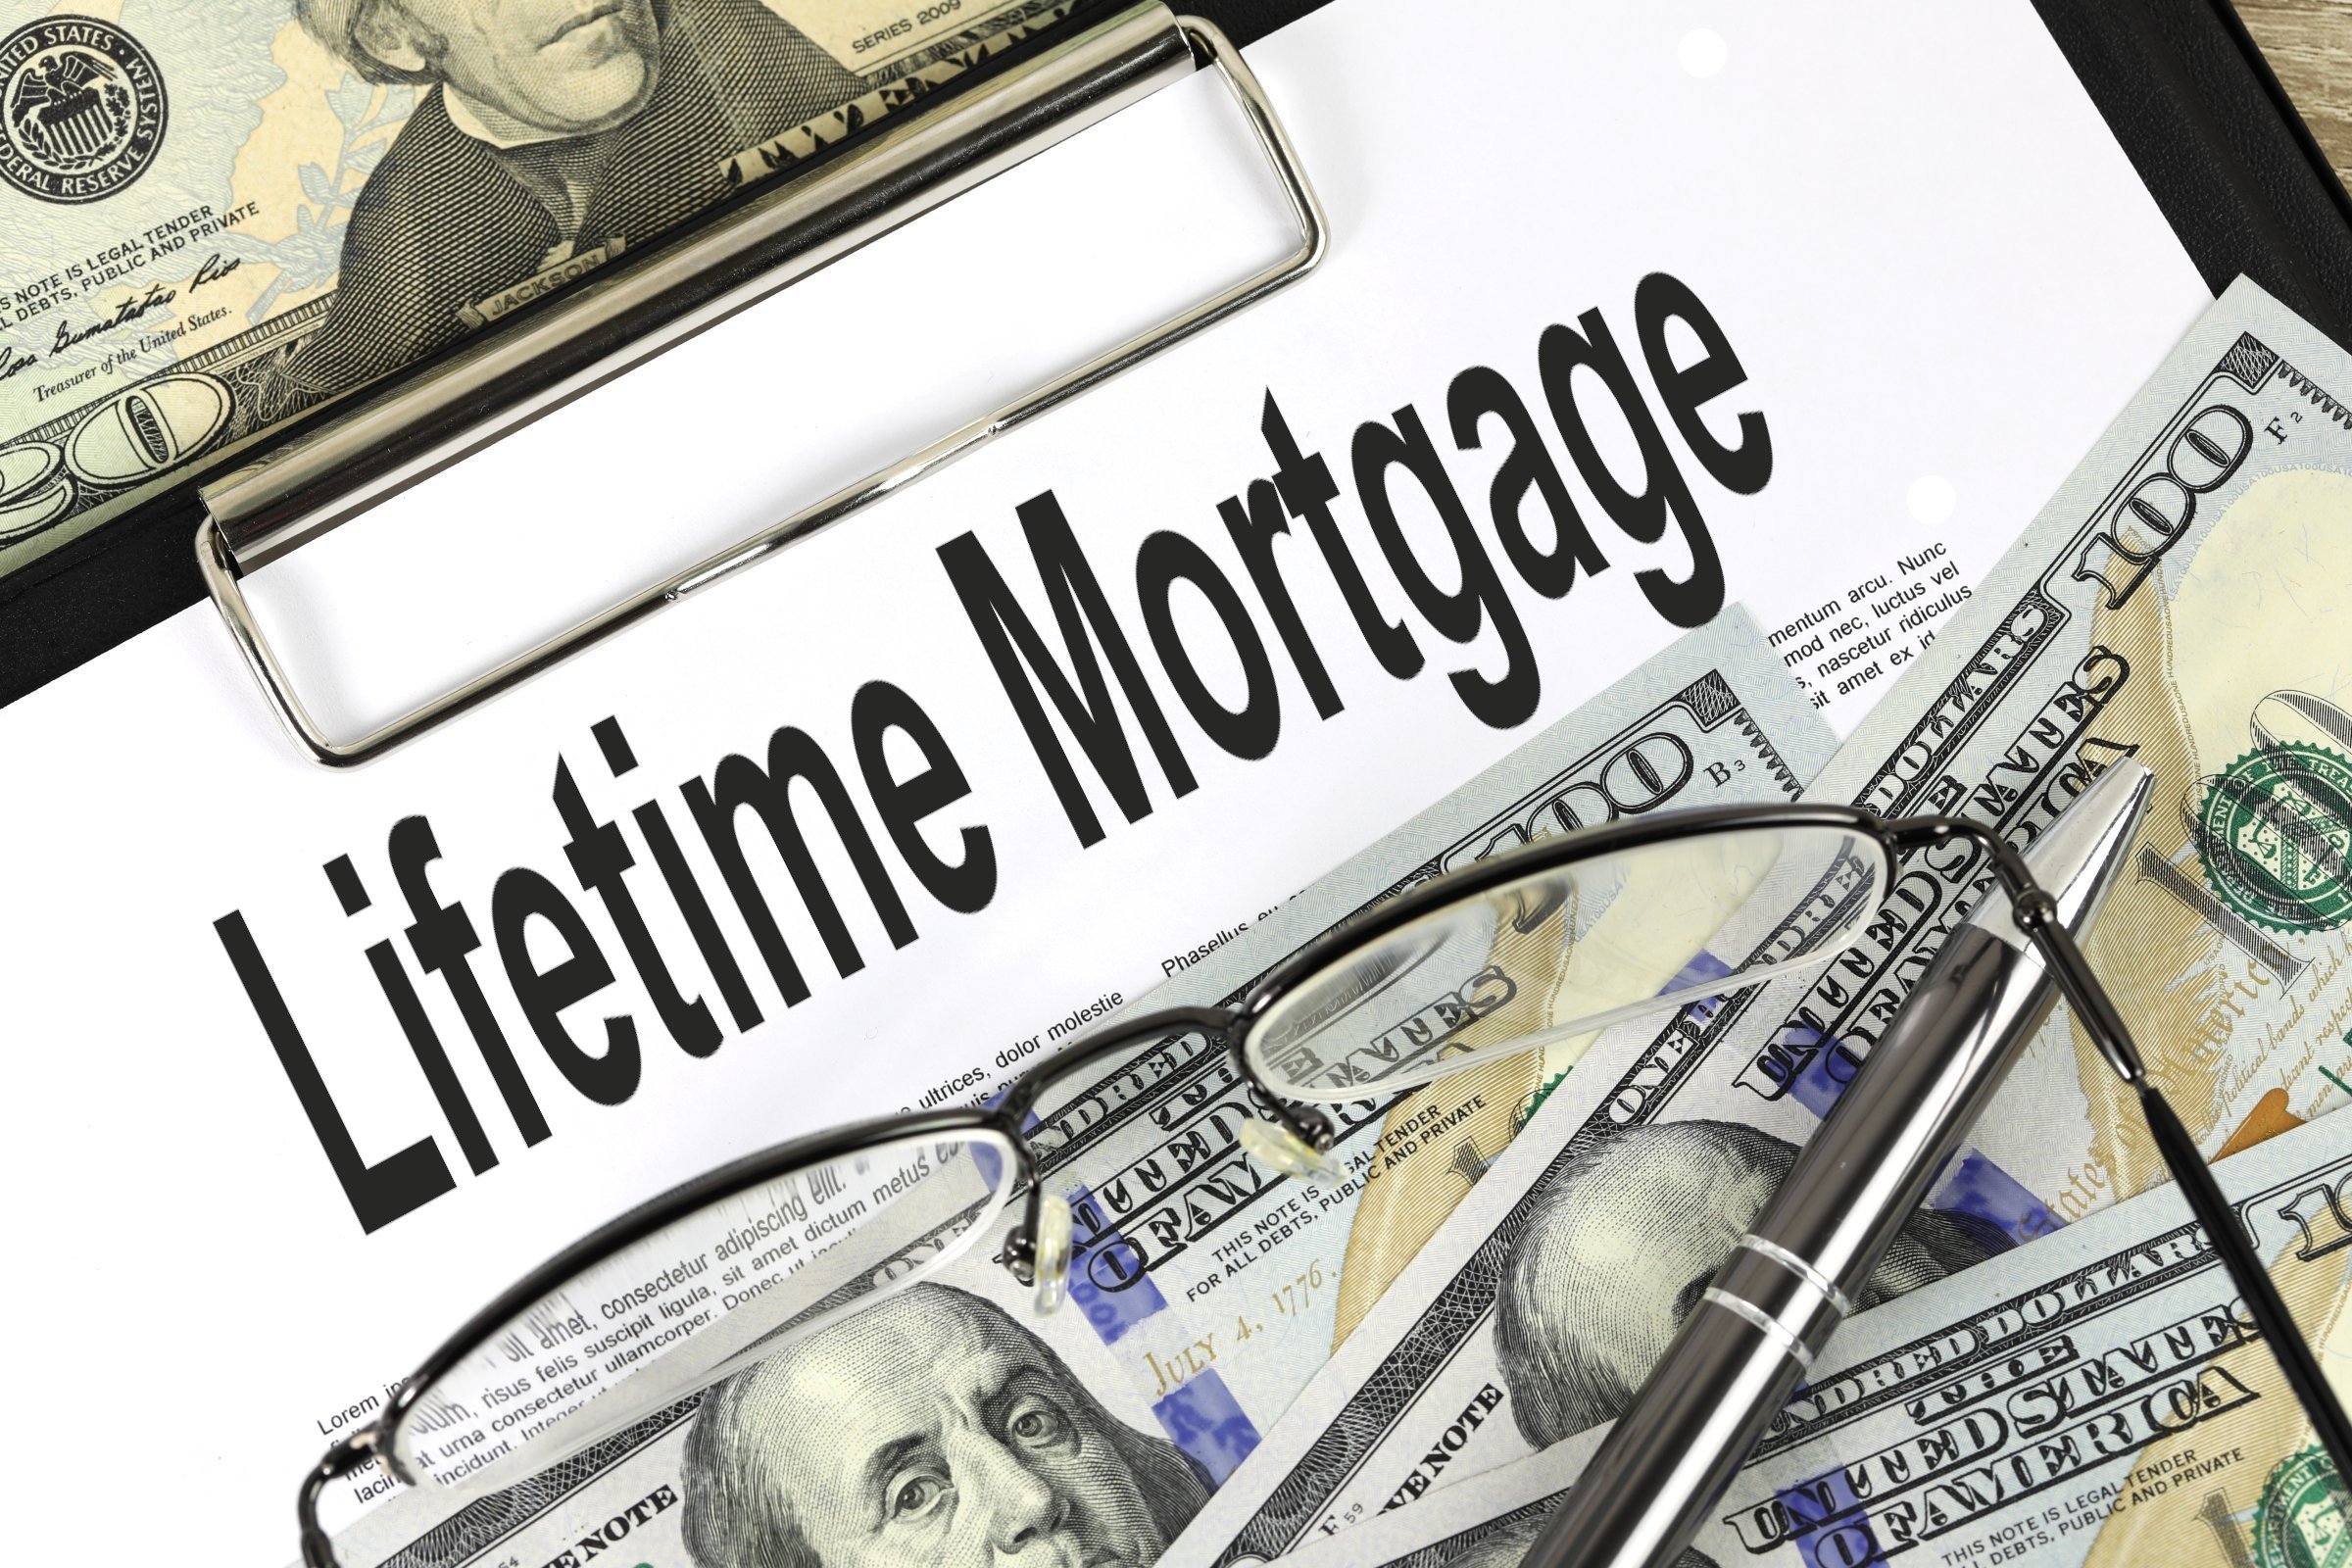 lifetime mortgage